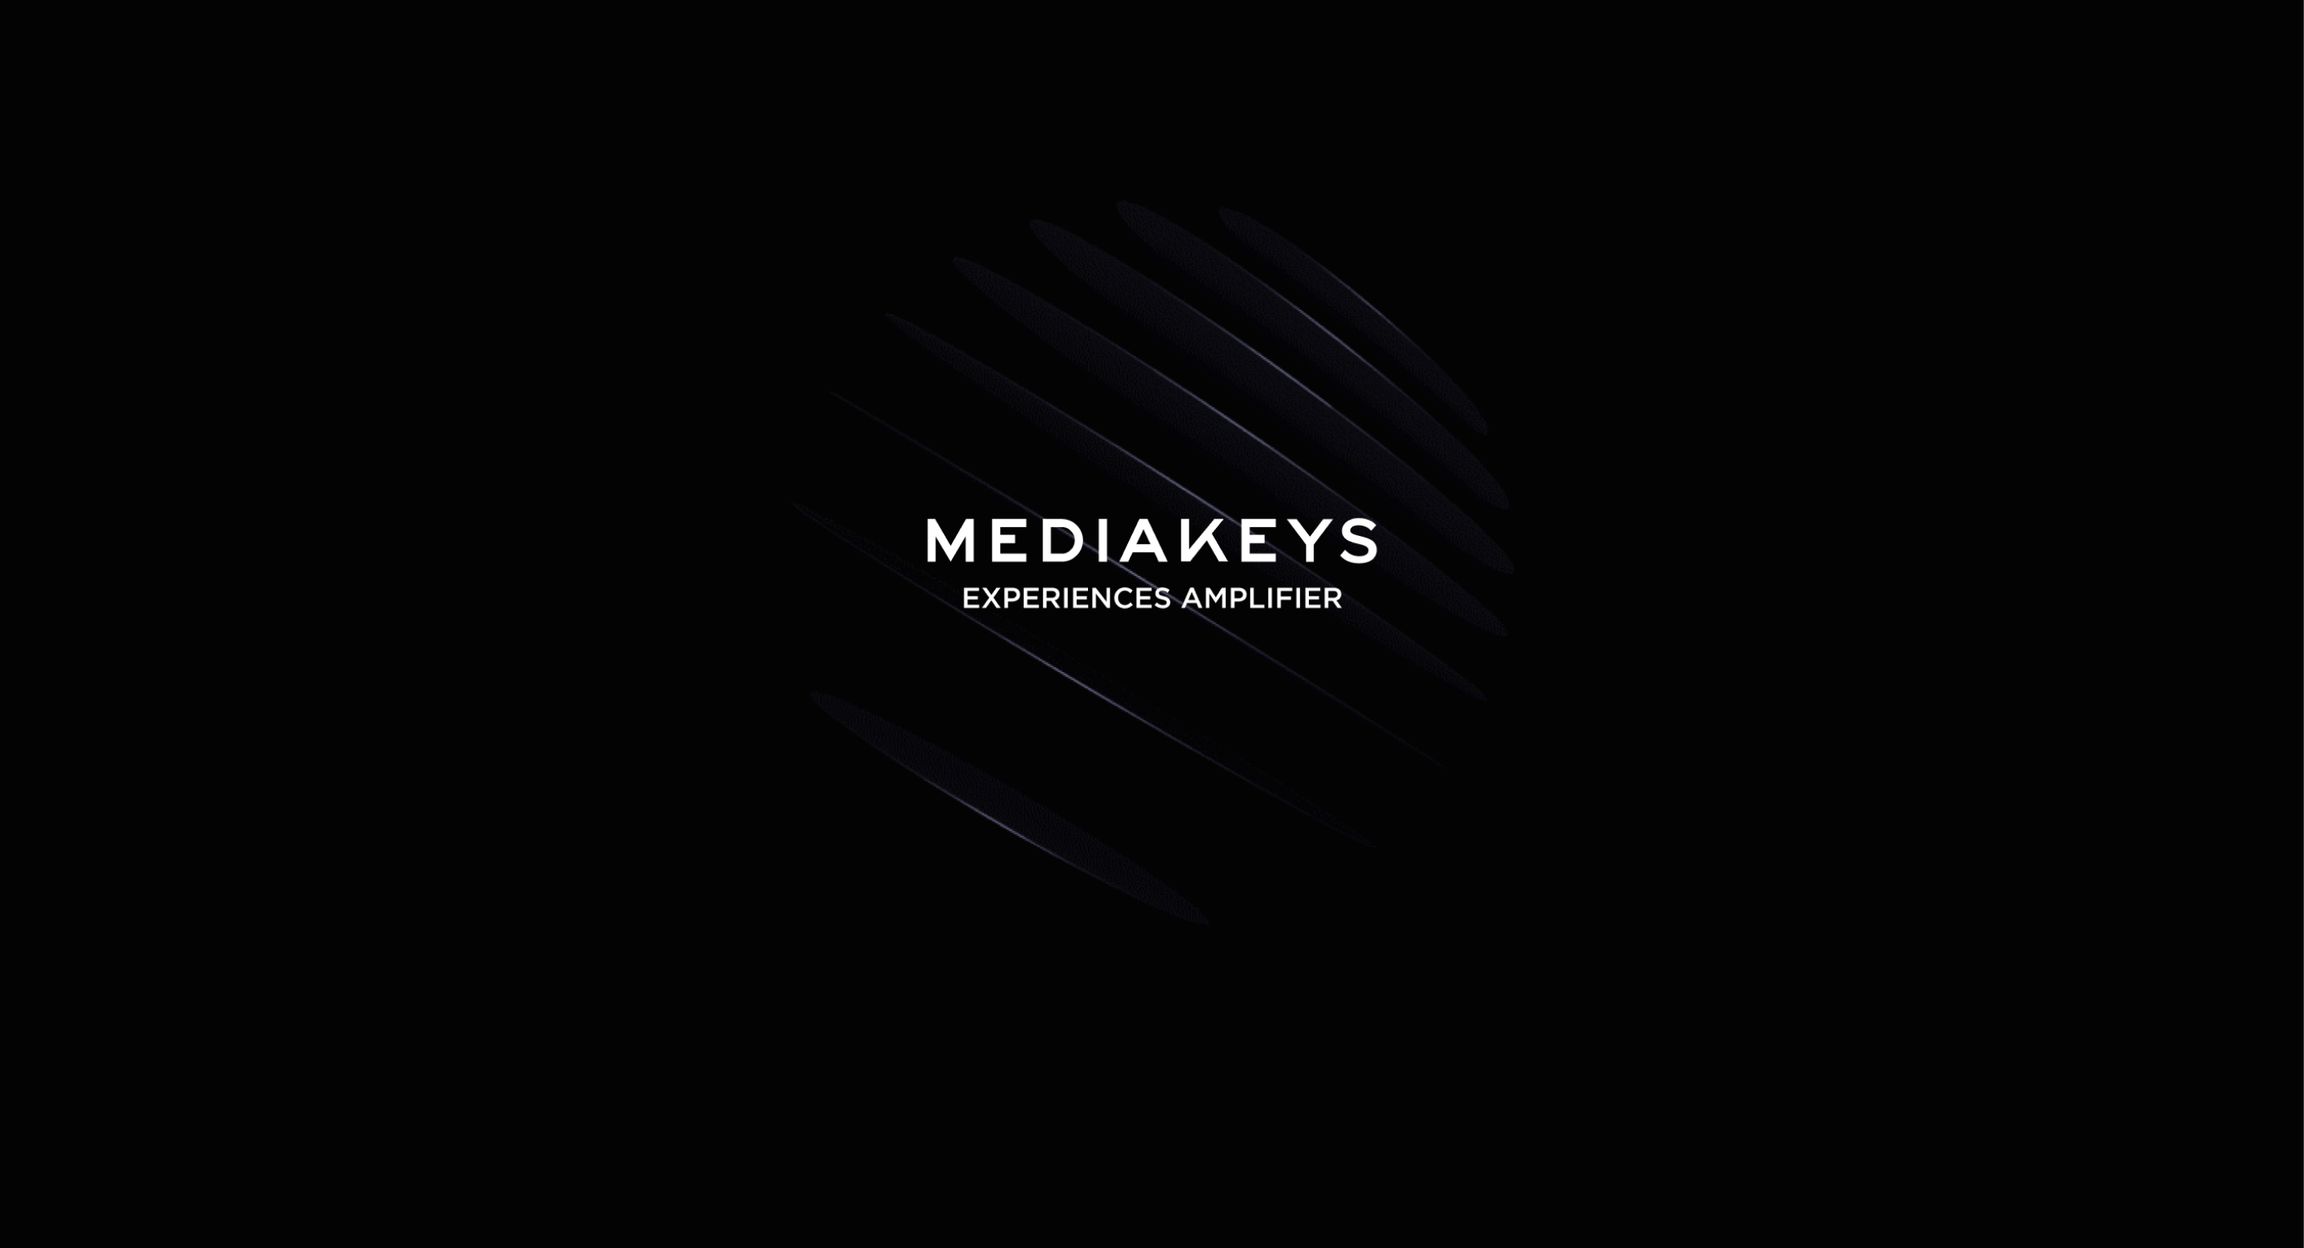 Mediakeys logo image on a black background